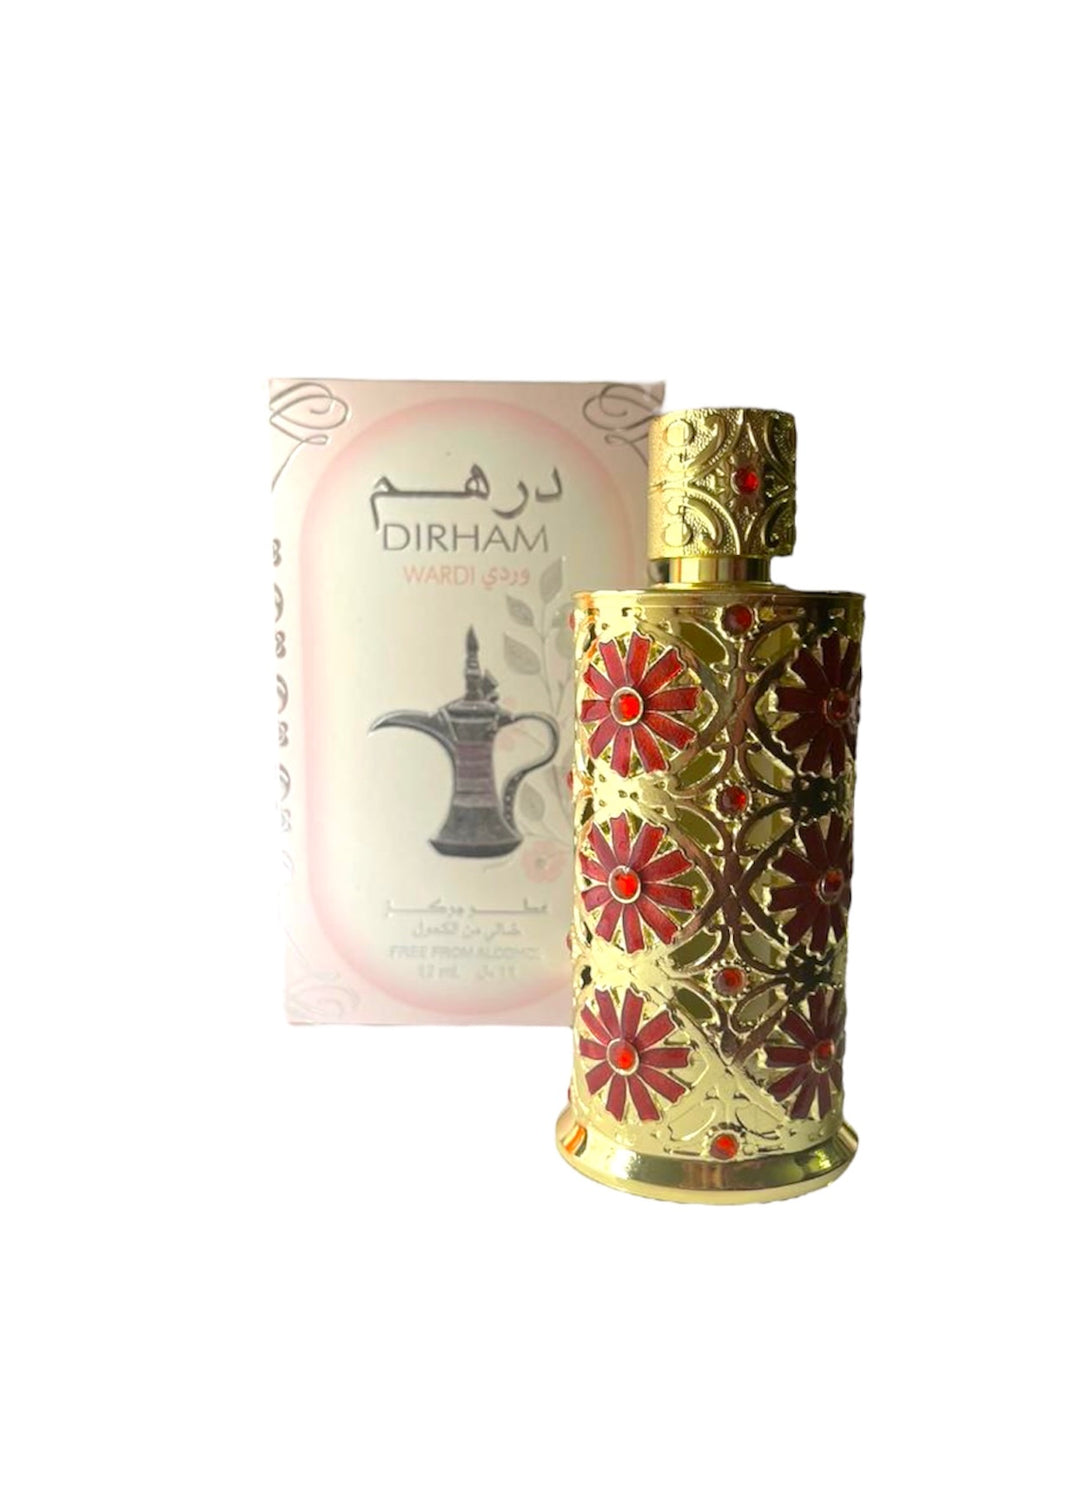 Dirham Wardi Pure Concentrated Perfume Oil By Ard Al Zaafaran